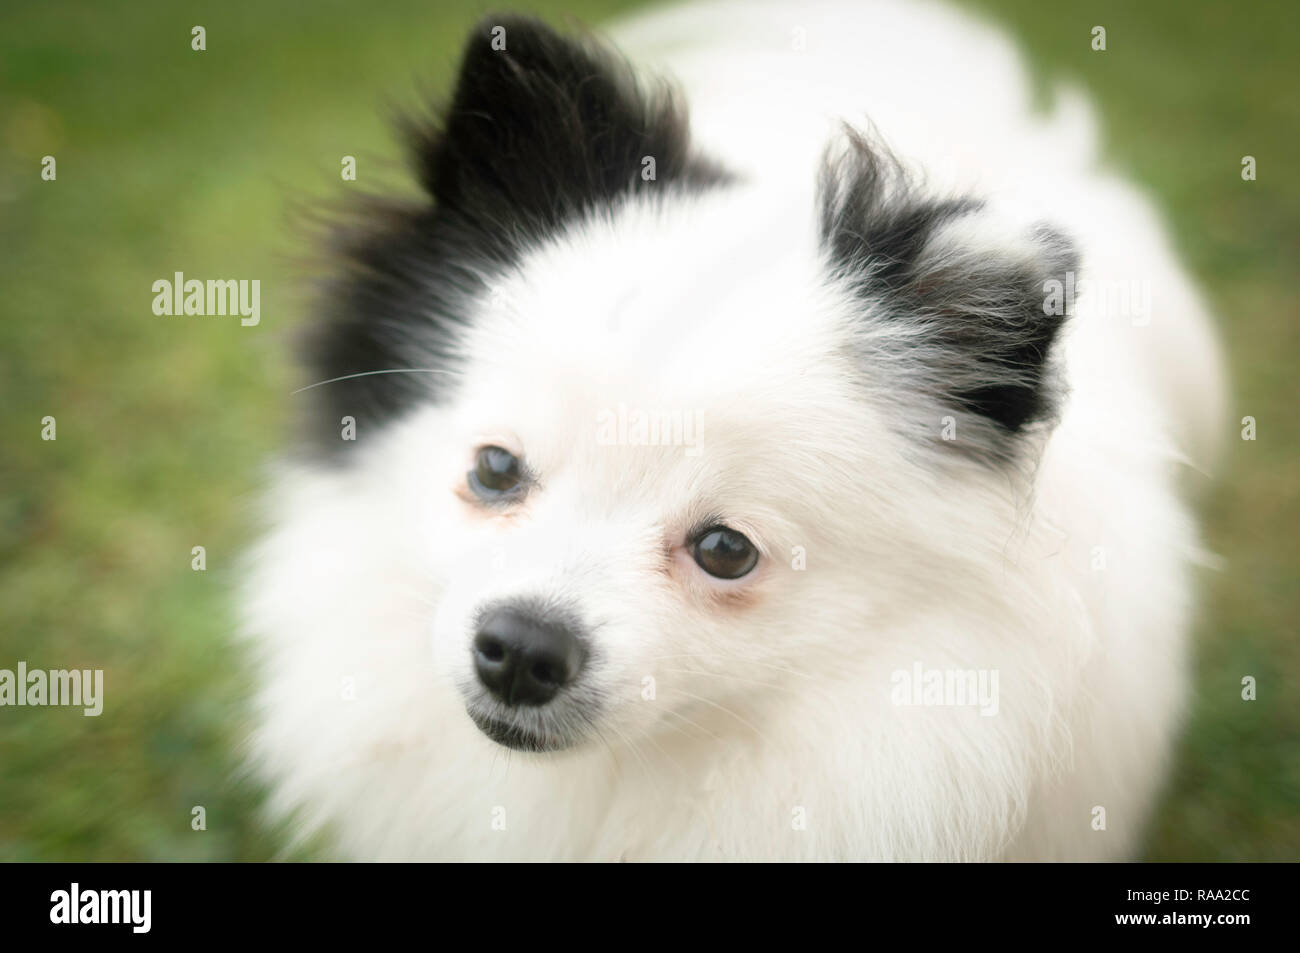 pomeranian dog white and black